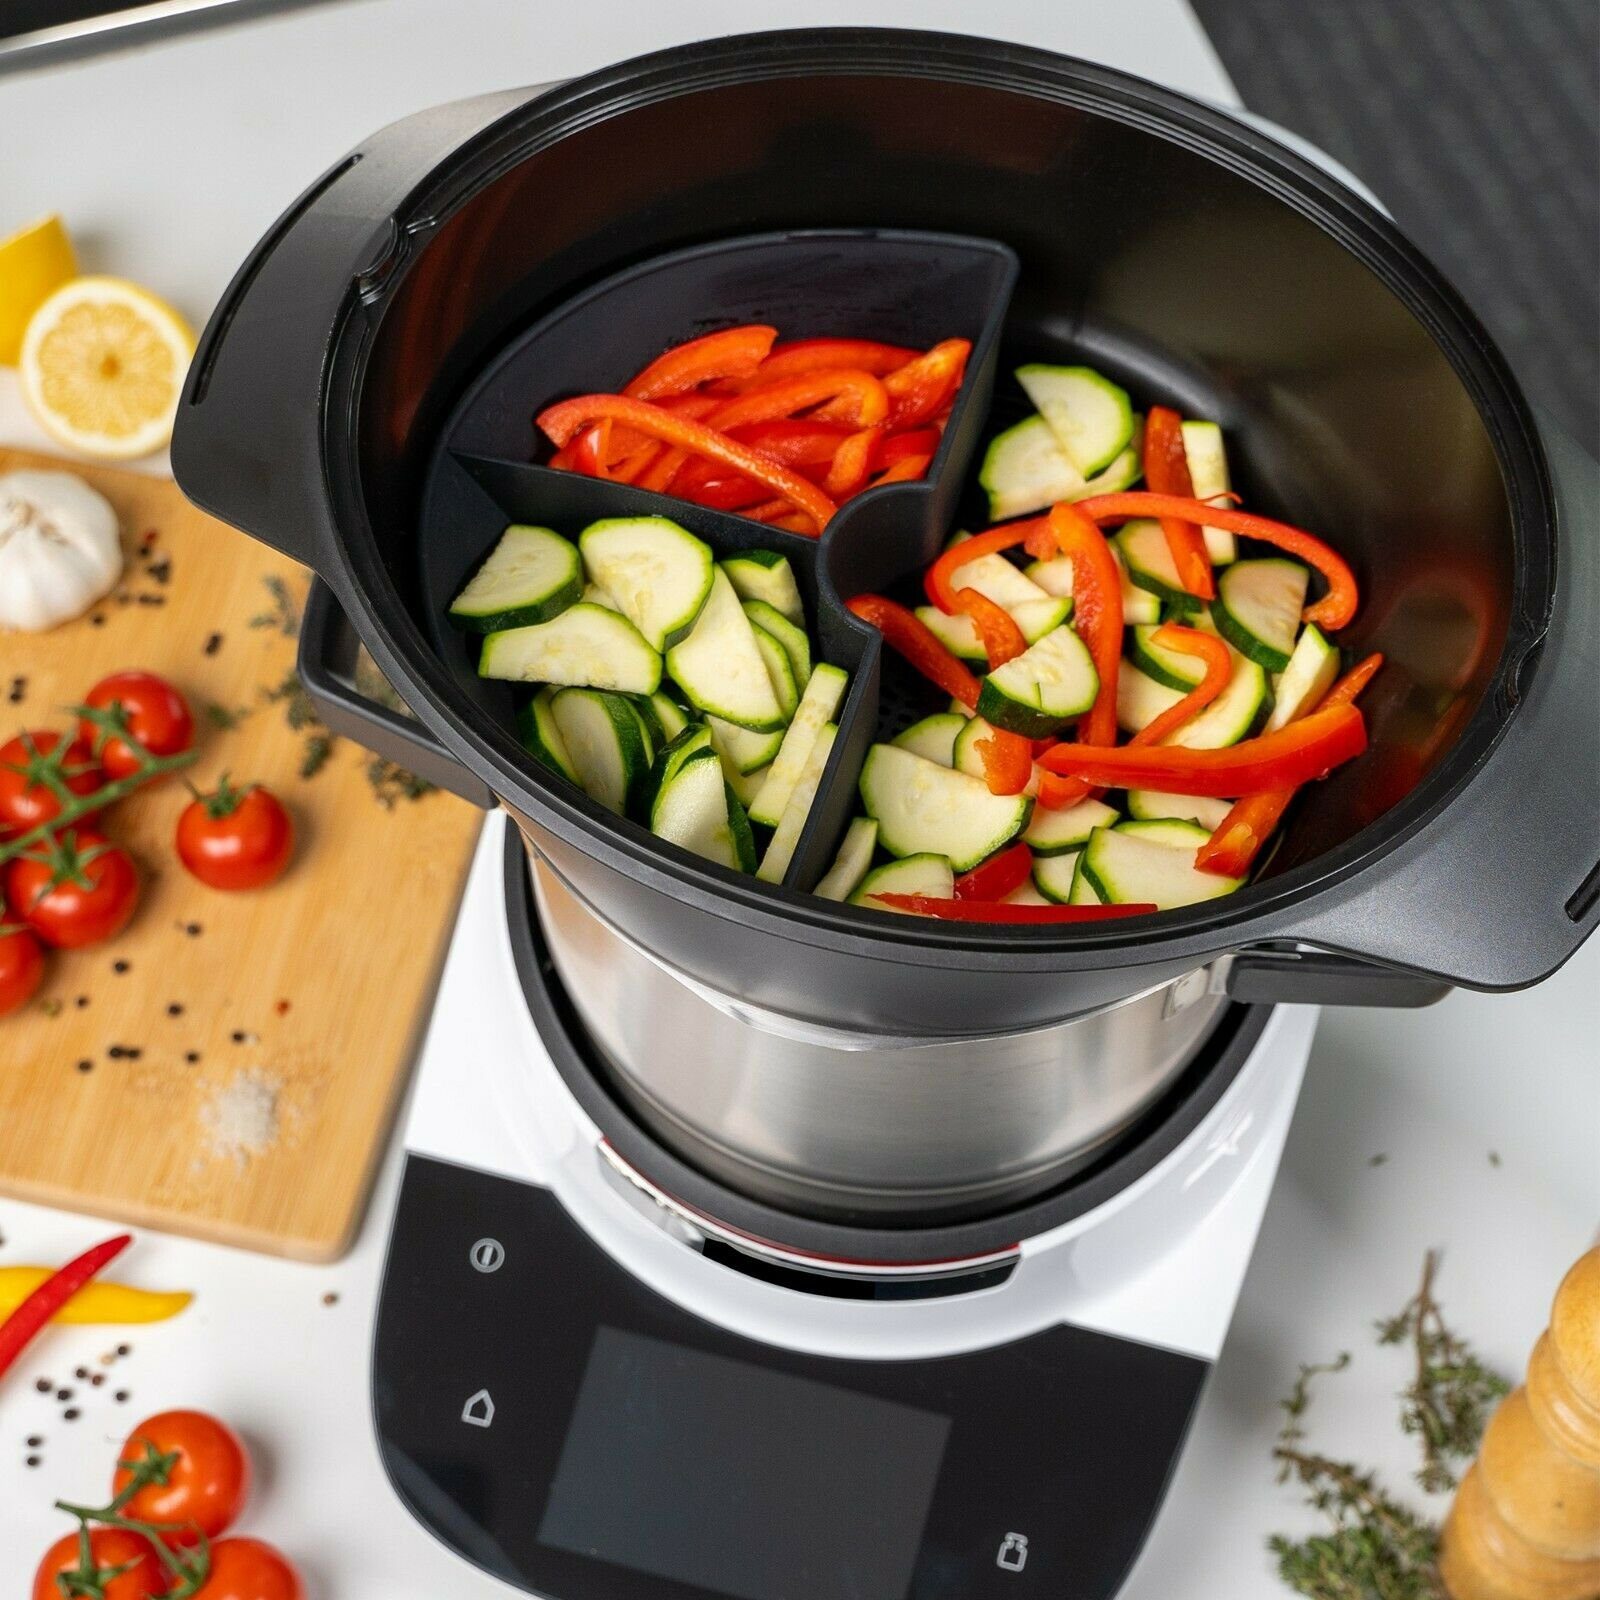 Mixcover Küchenmaschinen-Adapter mixcover Garraumteiler (viertel) für Bosch Cookit Dampfgarraum | Küchenmaschinen-Adapter